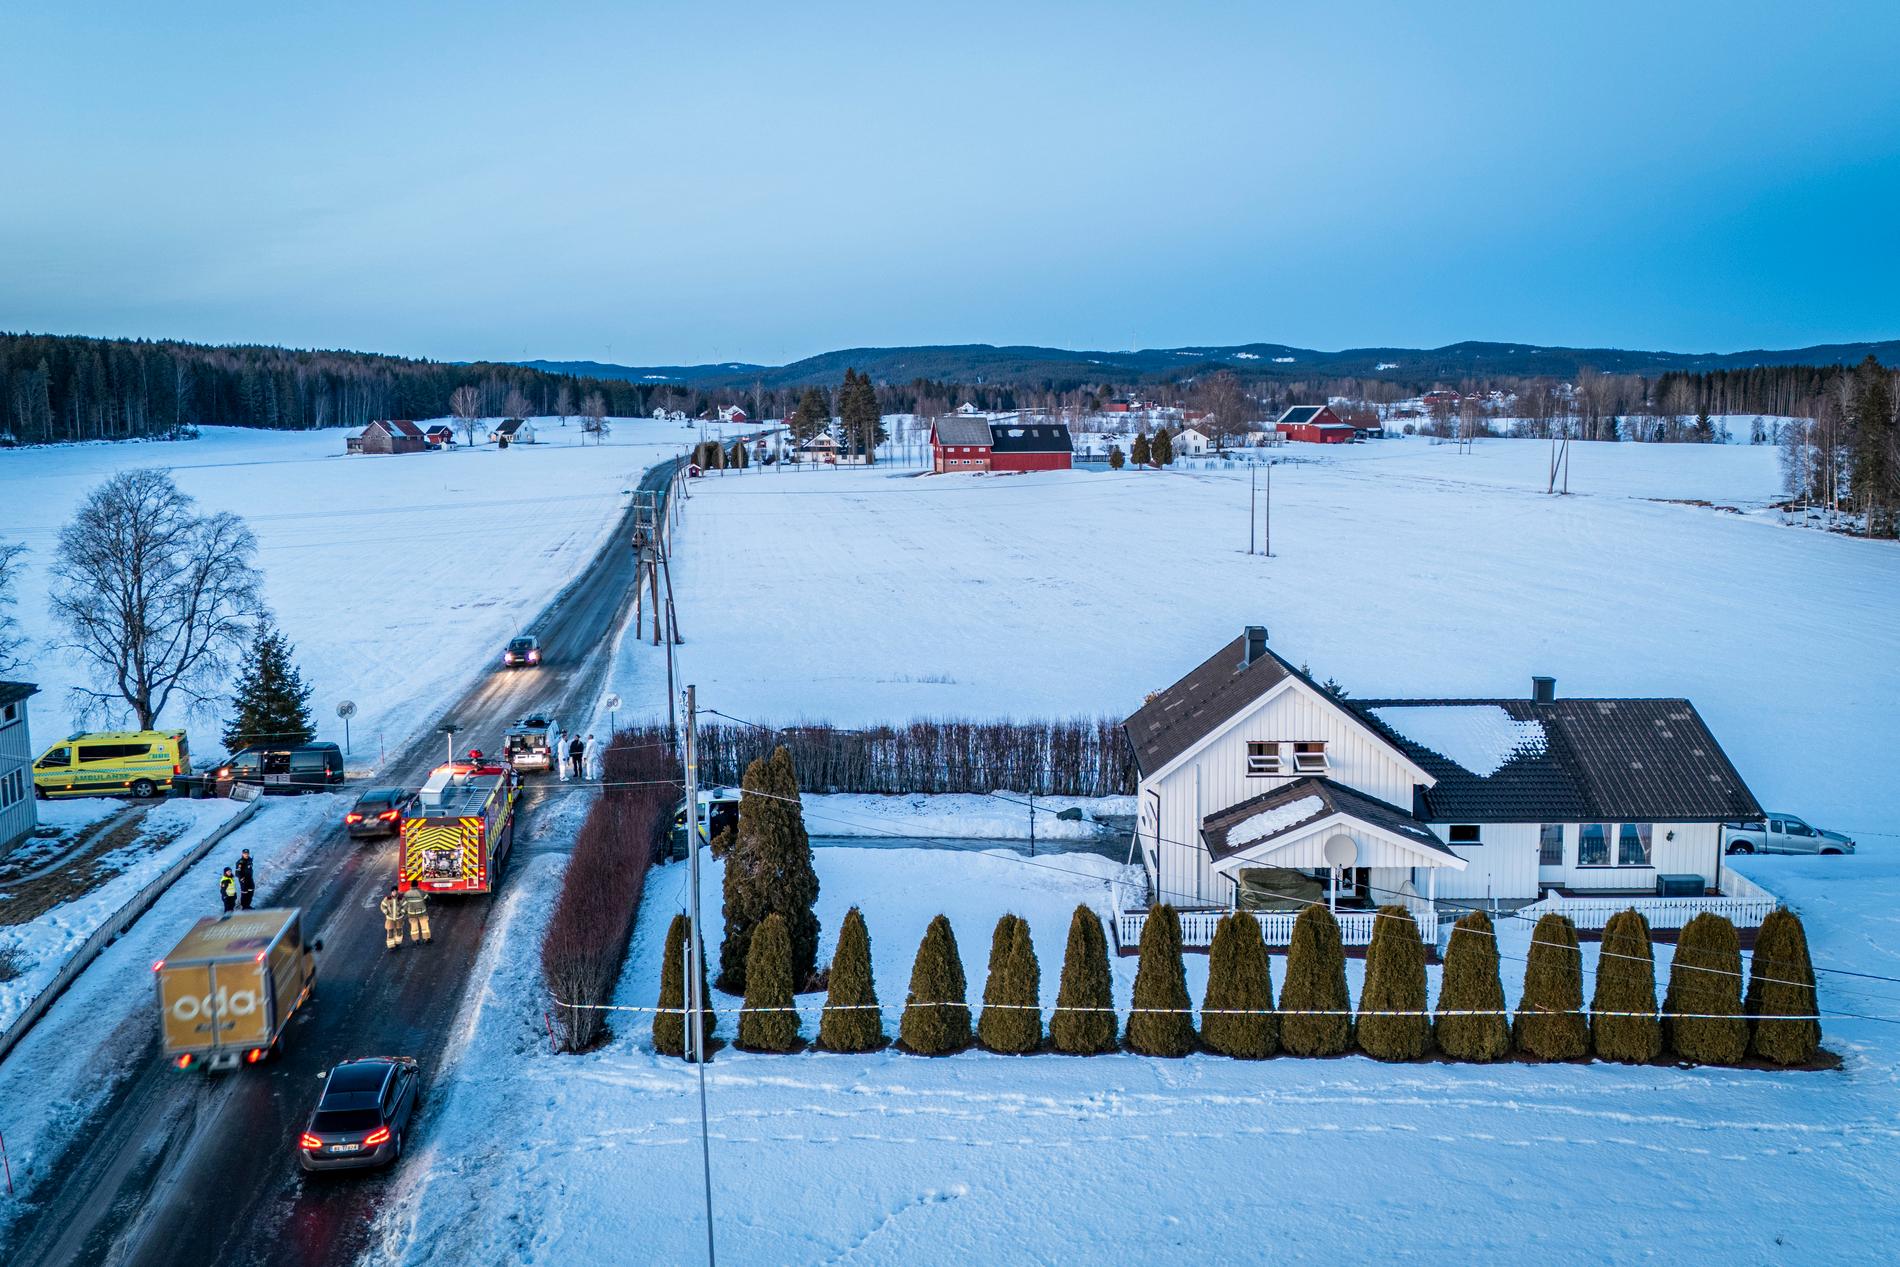 SCENE: Four people found dead in this house in Skogbykta.